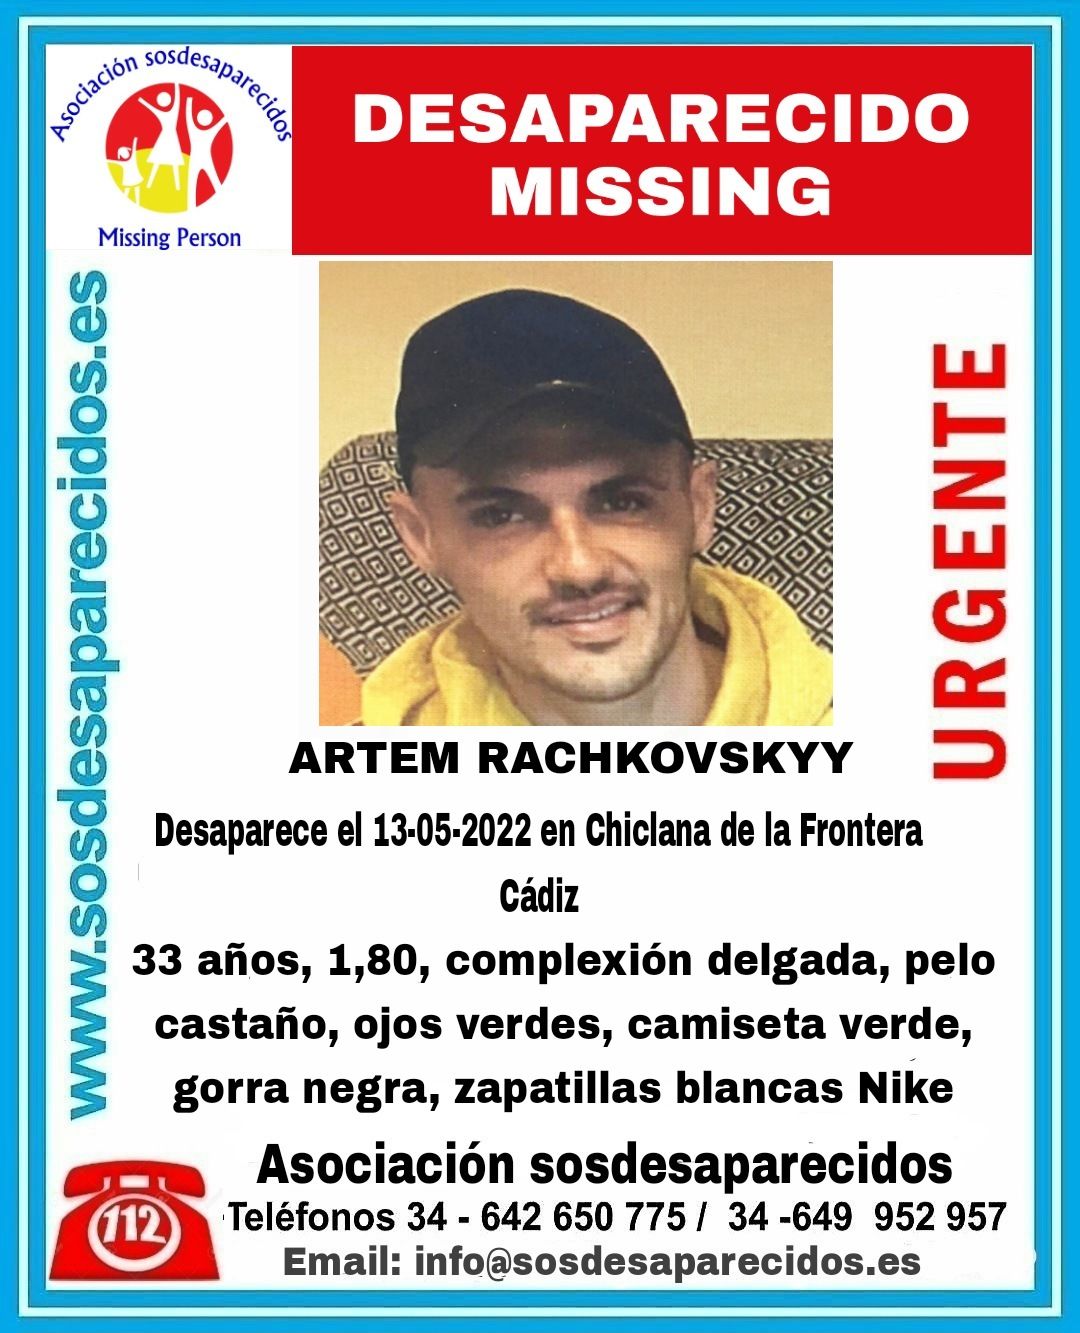 Artem Rachkovskyy, joven desaparecido en Chiclana.